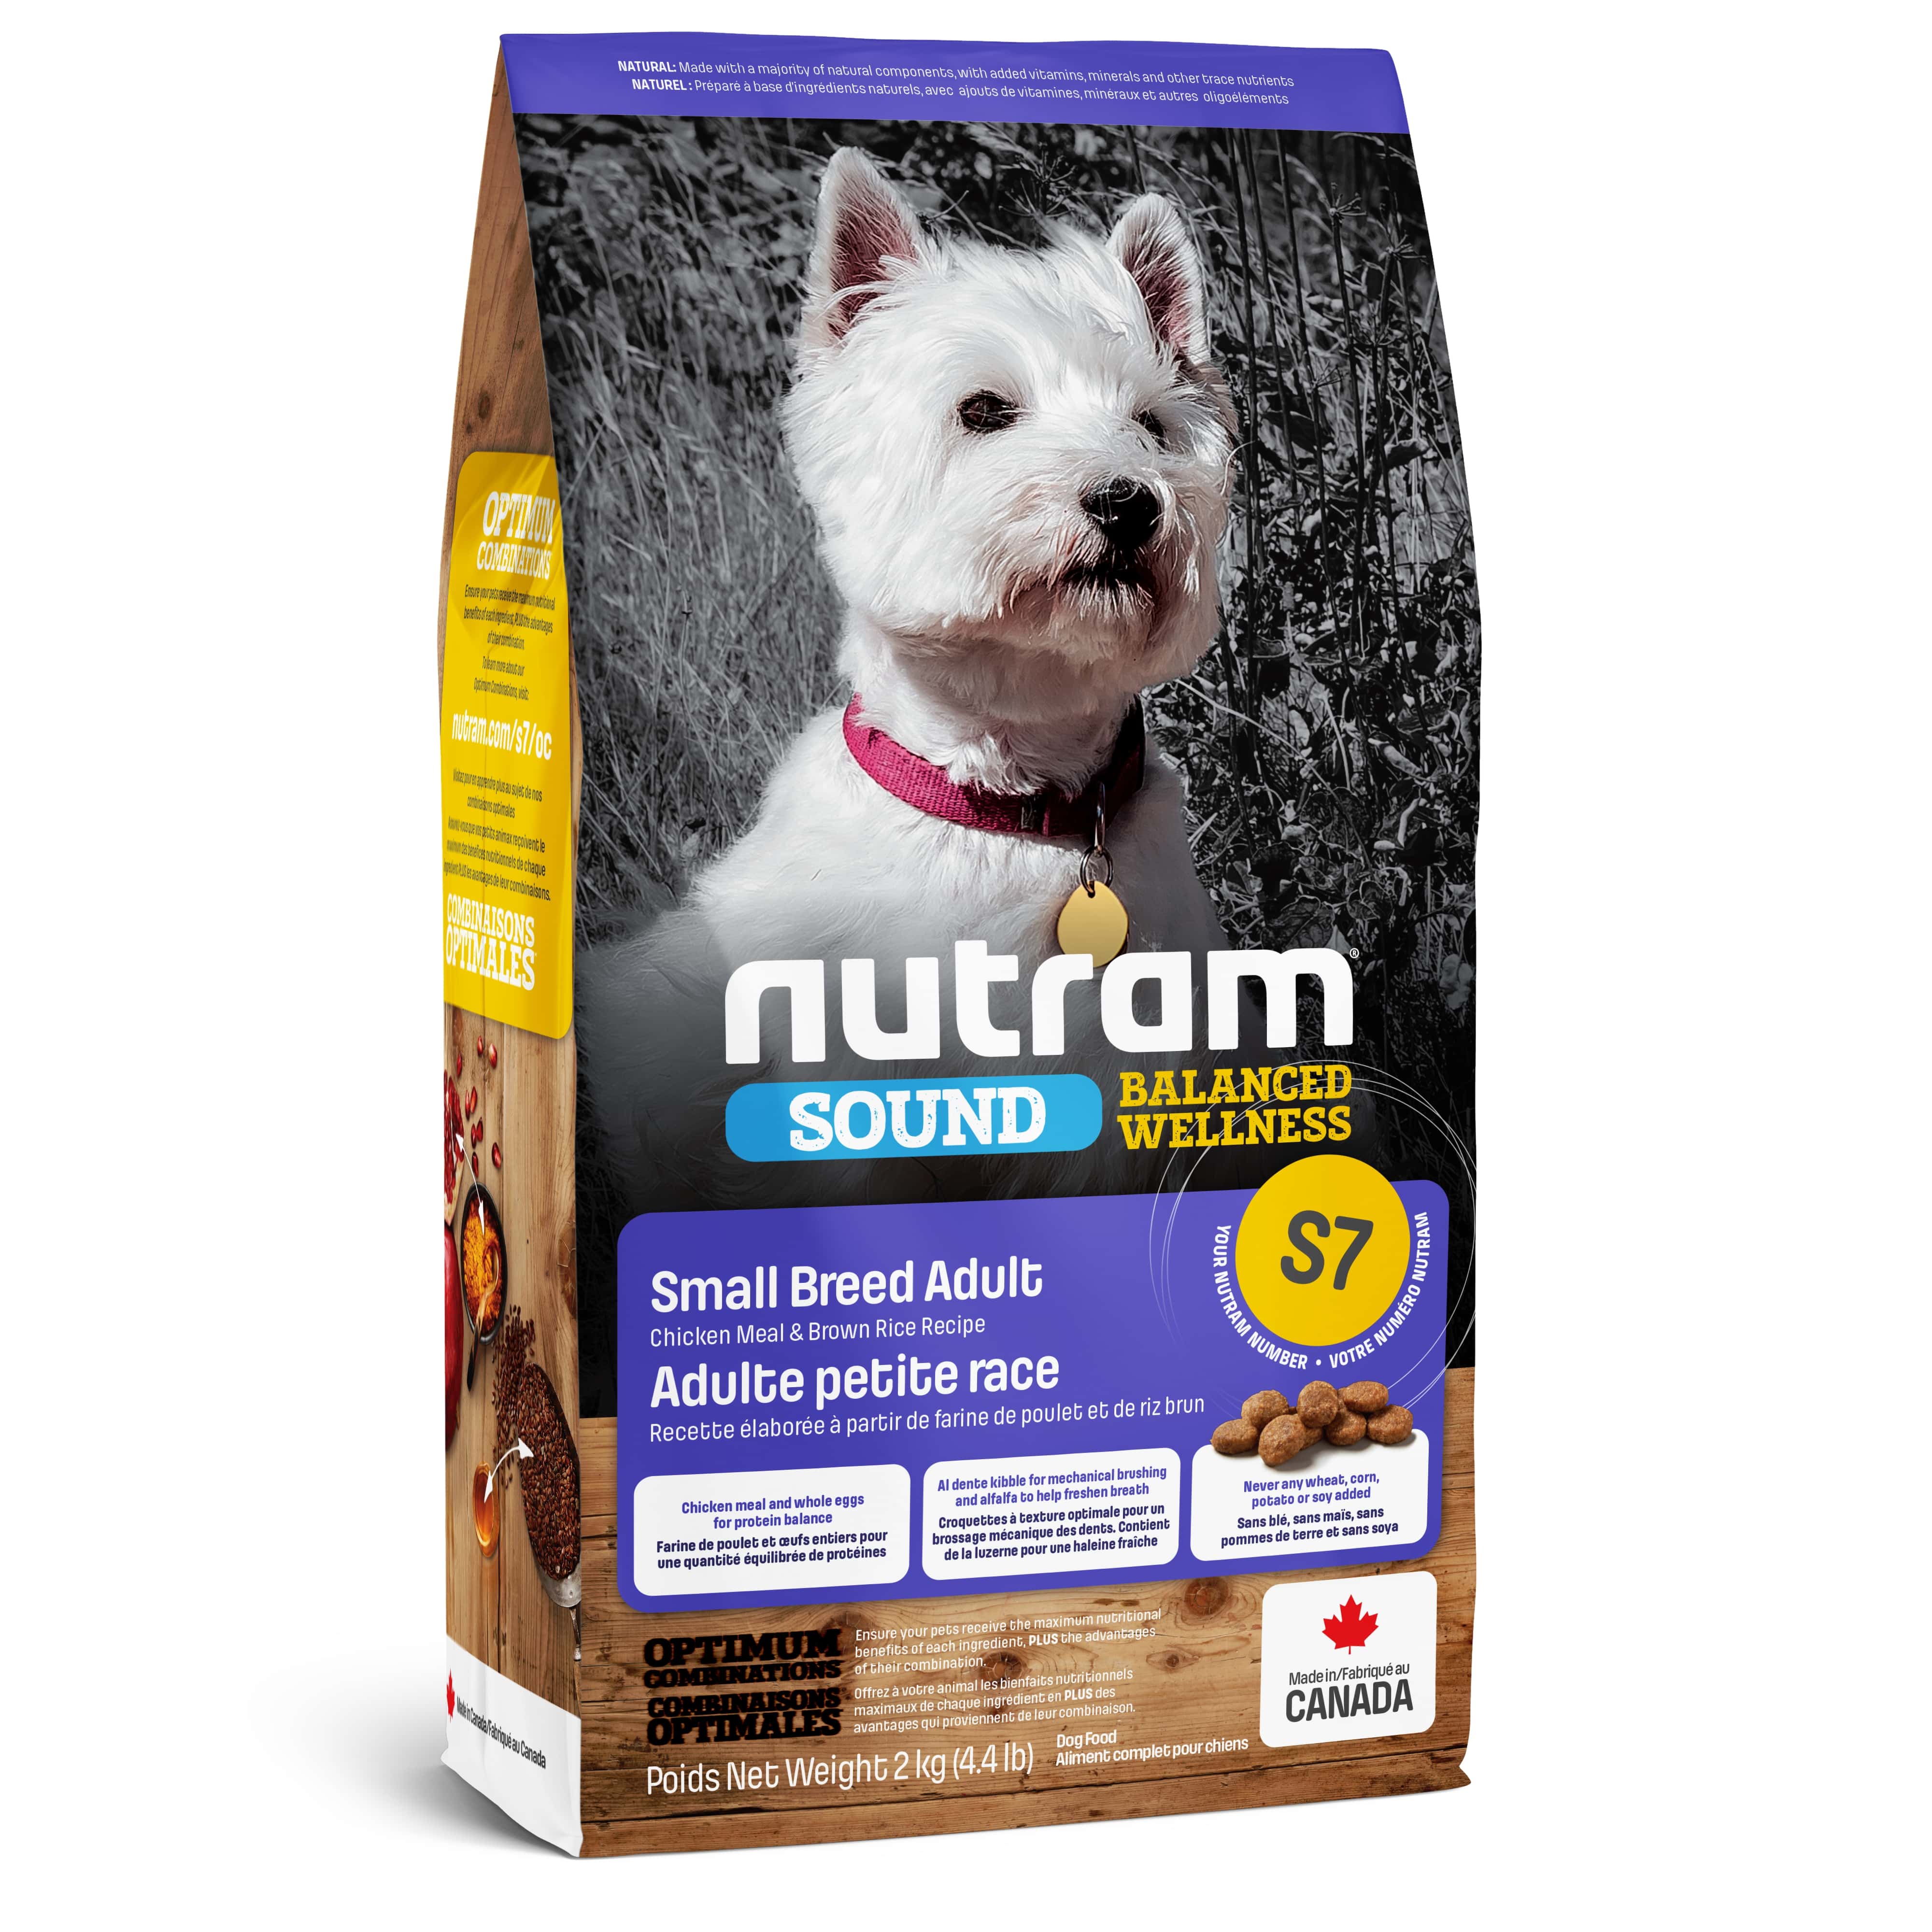 S7 Nutram Sound Balanced Wellness® Small Breed Adult Dog